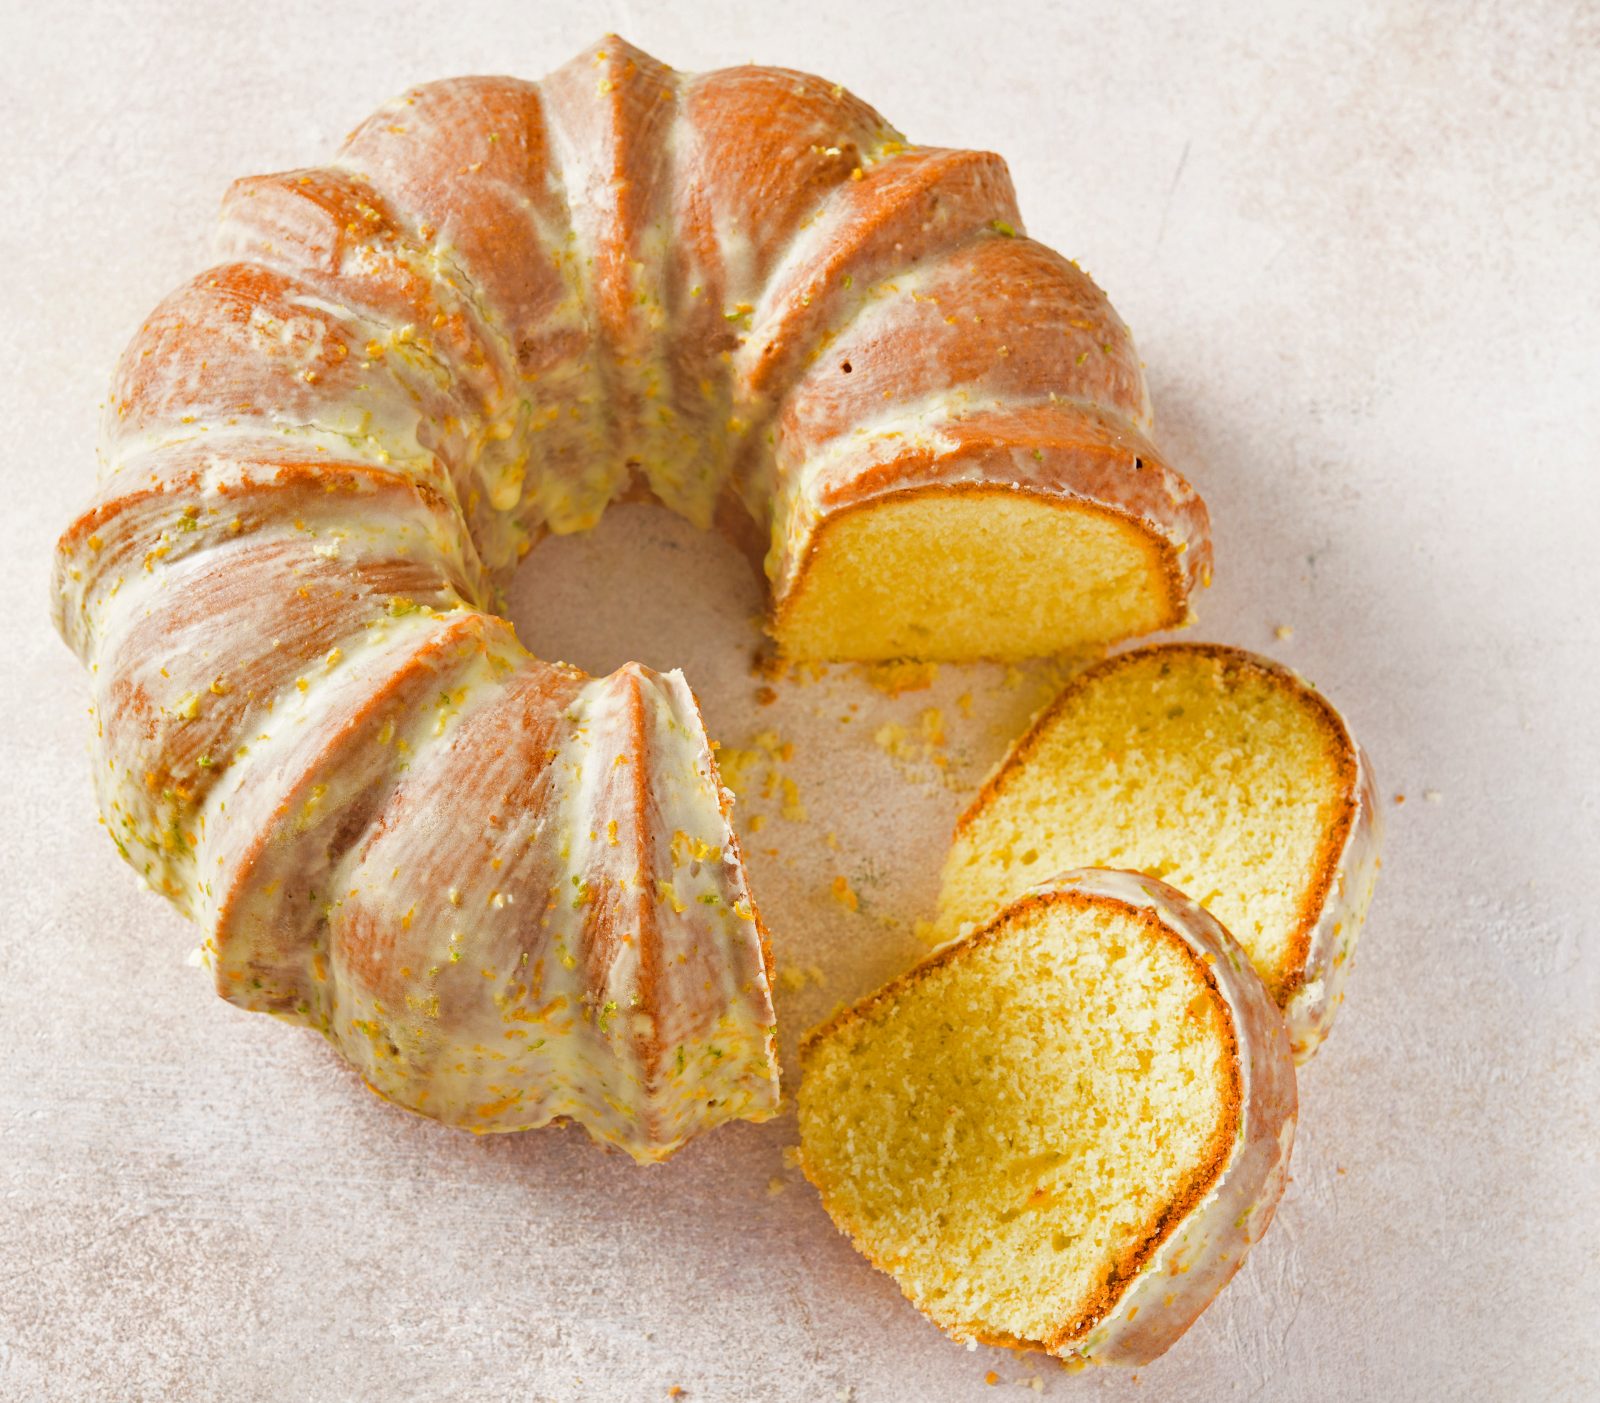 https://www.177milkstreet.com/assets/site/Recipes/_large/Glazed-Three-Citrus-Almond-Bundt-Cake.jpg